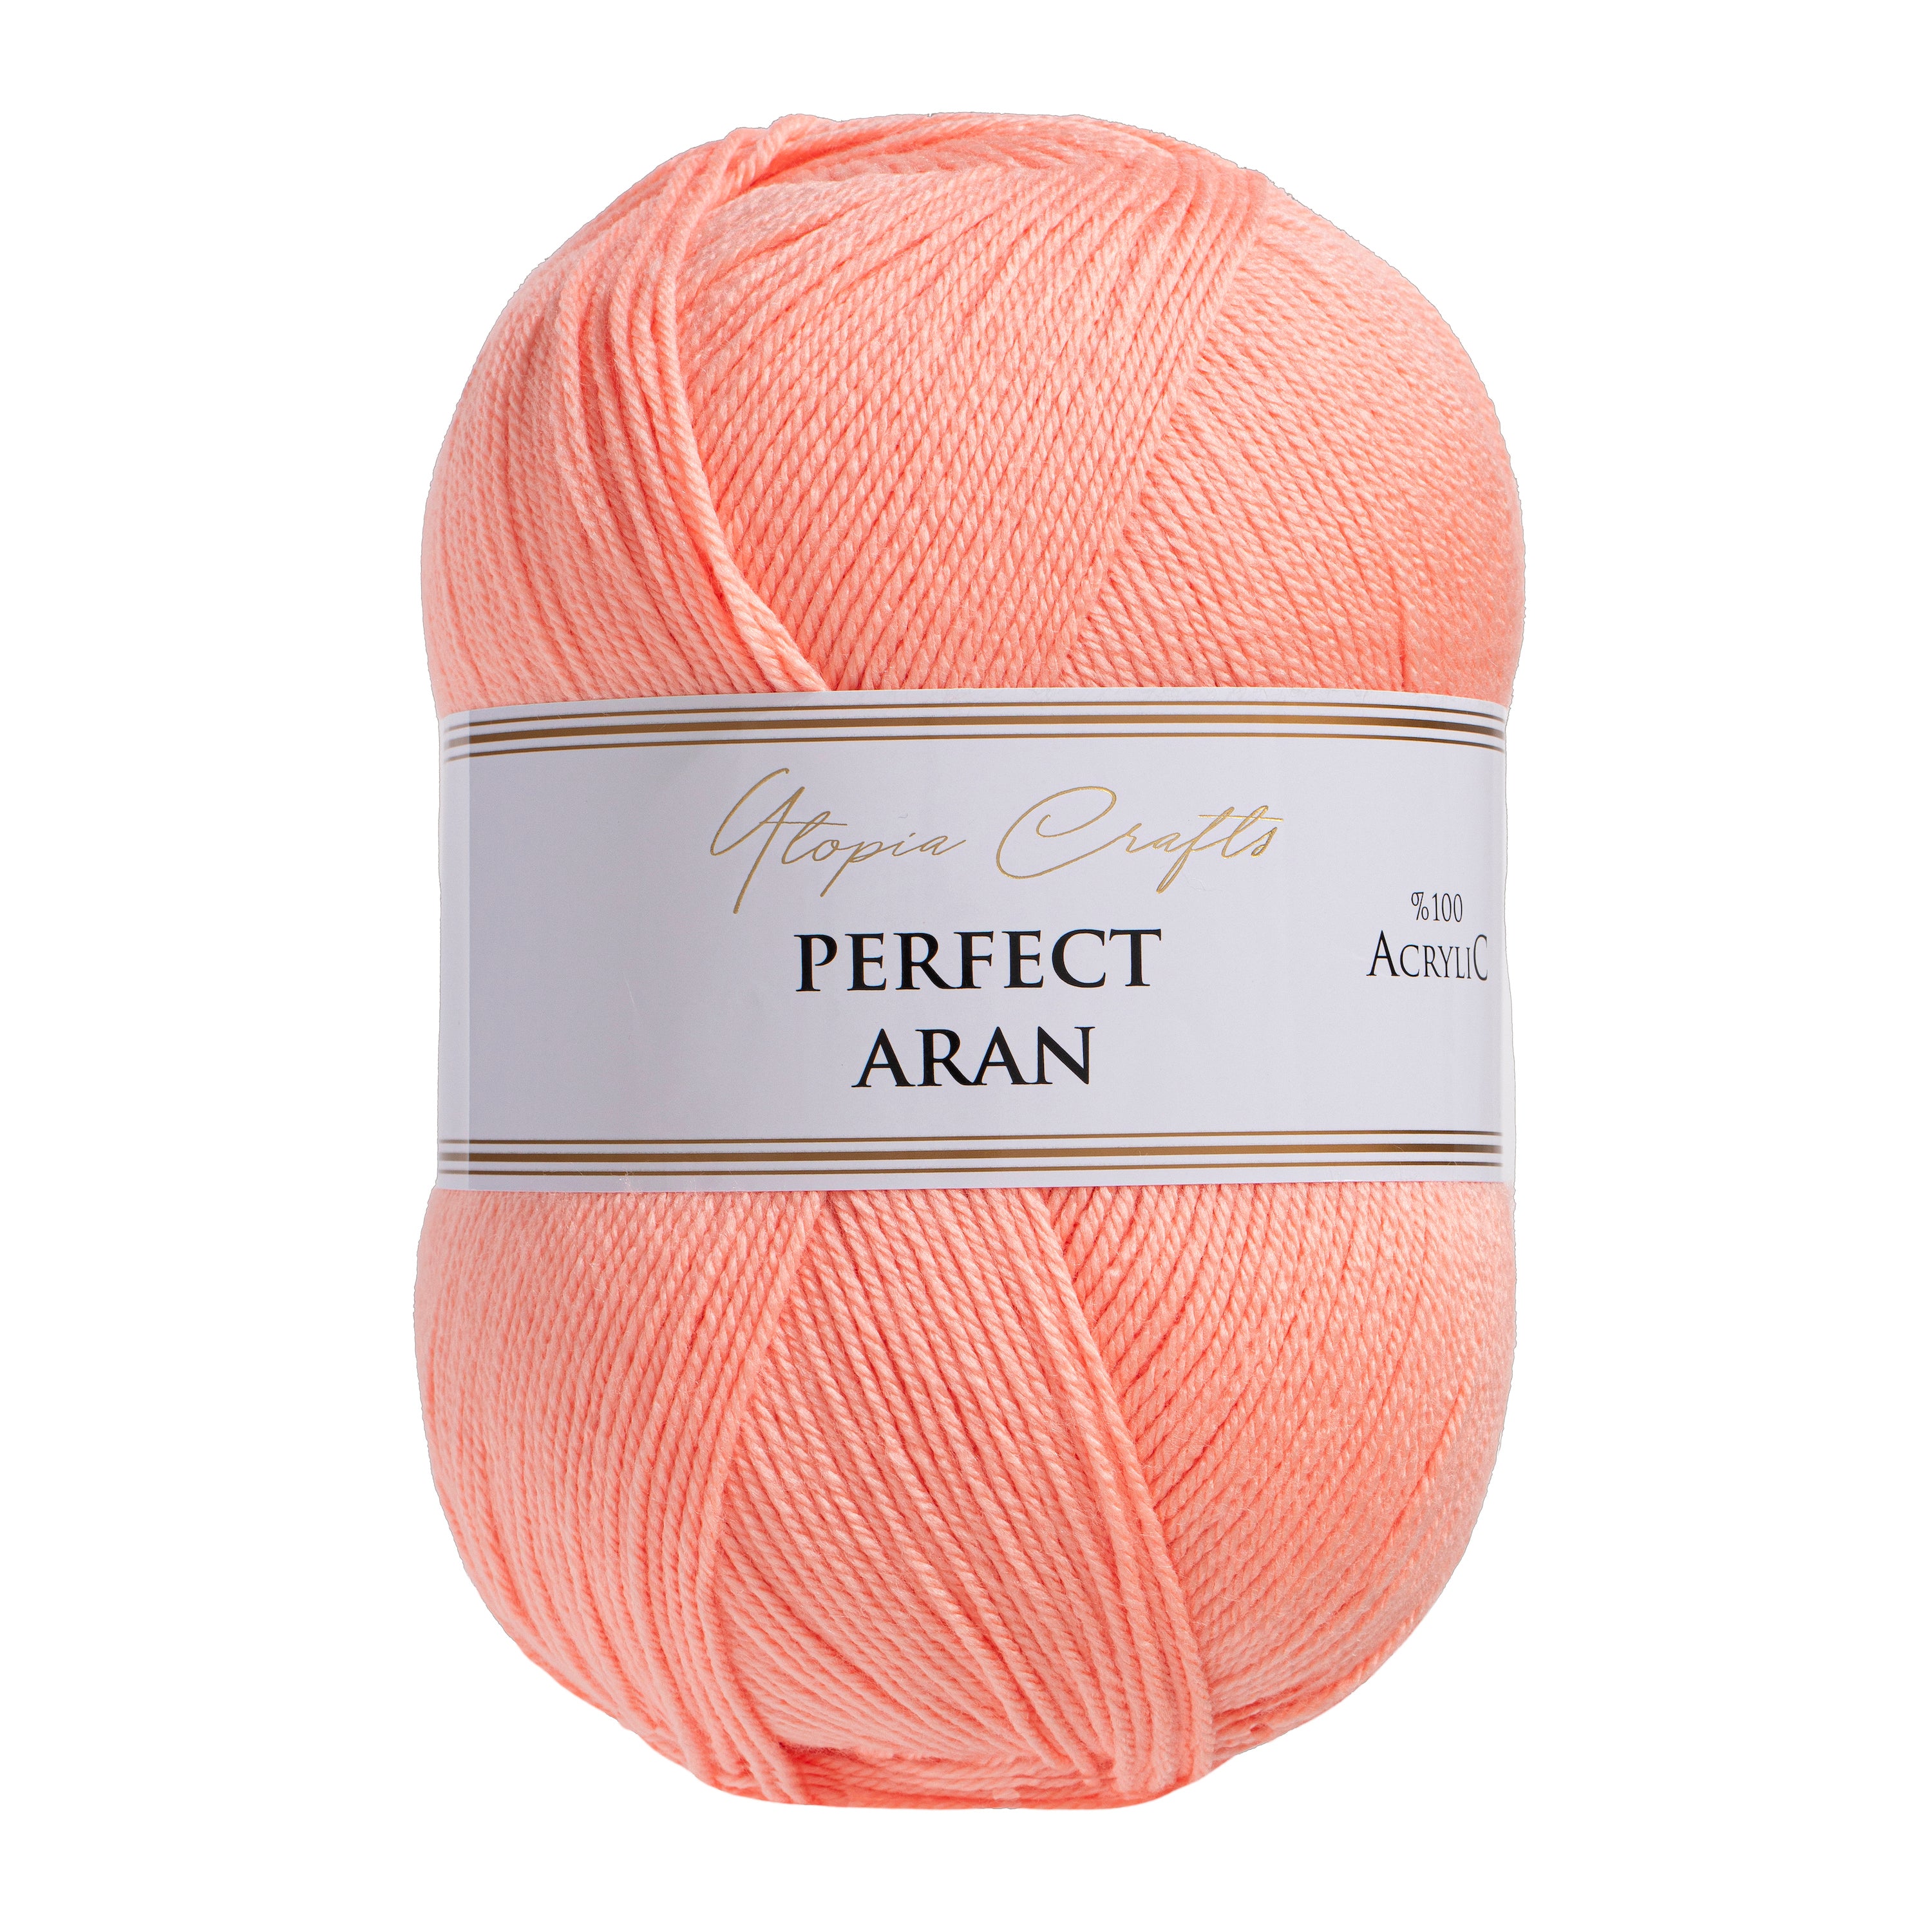 Utopia Crafts Aran Knitting and Crochet Yarn, 400g [Terra Cotta]